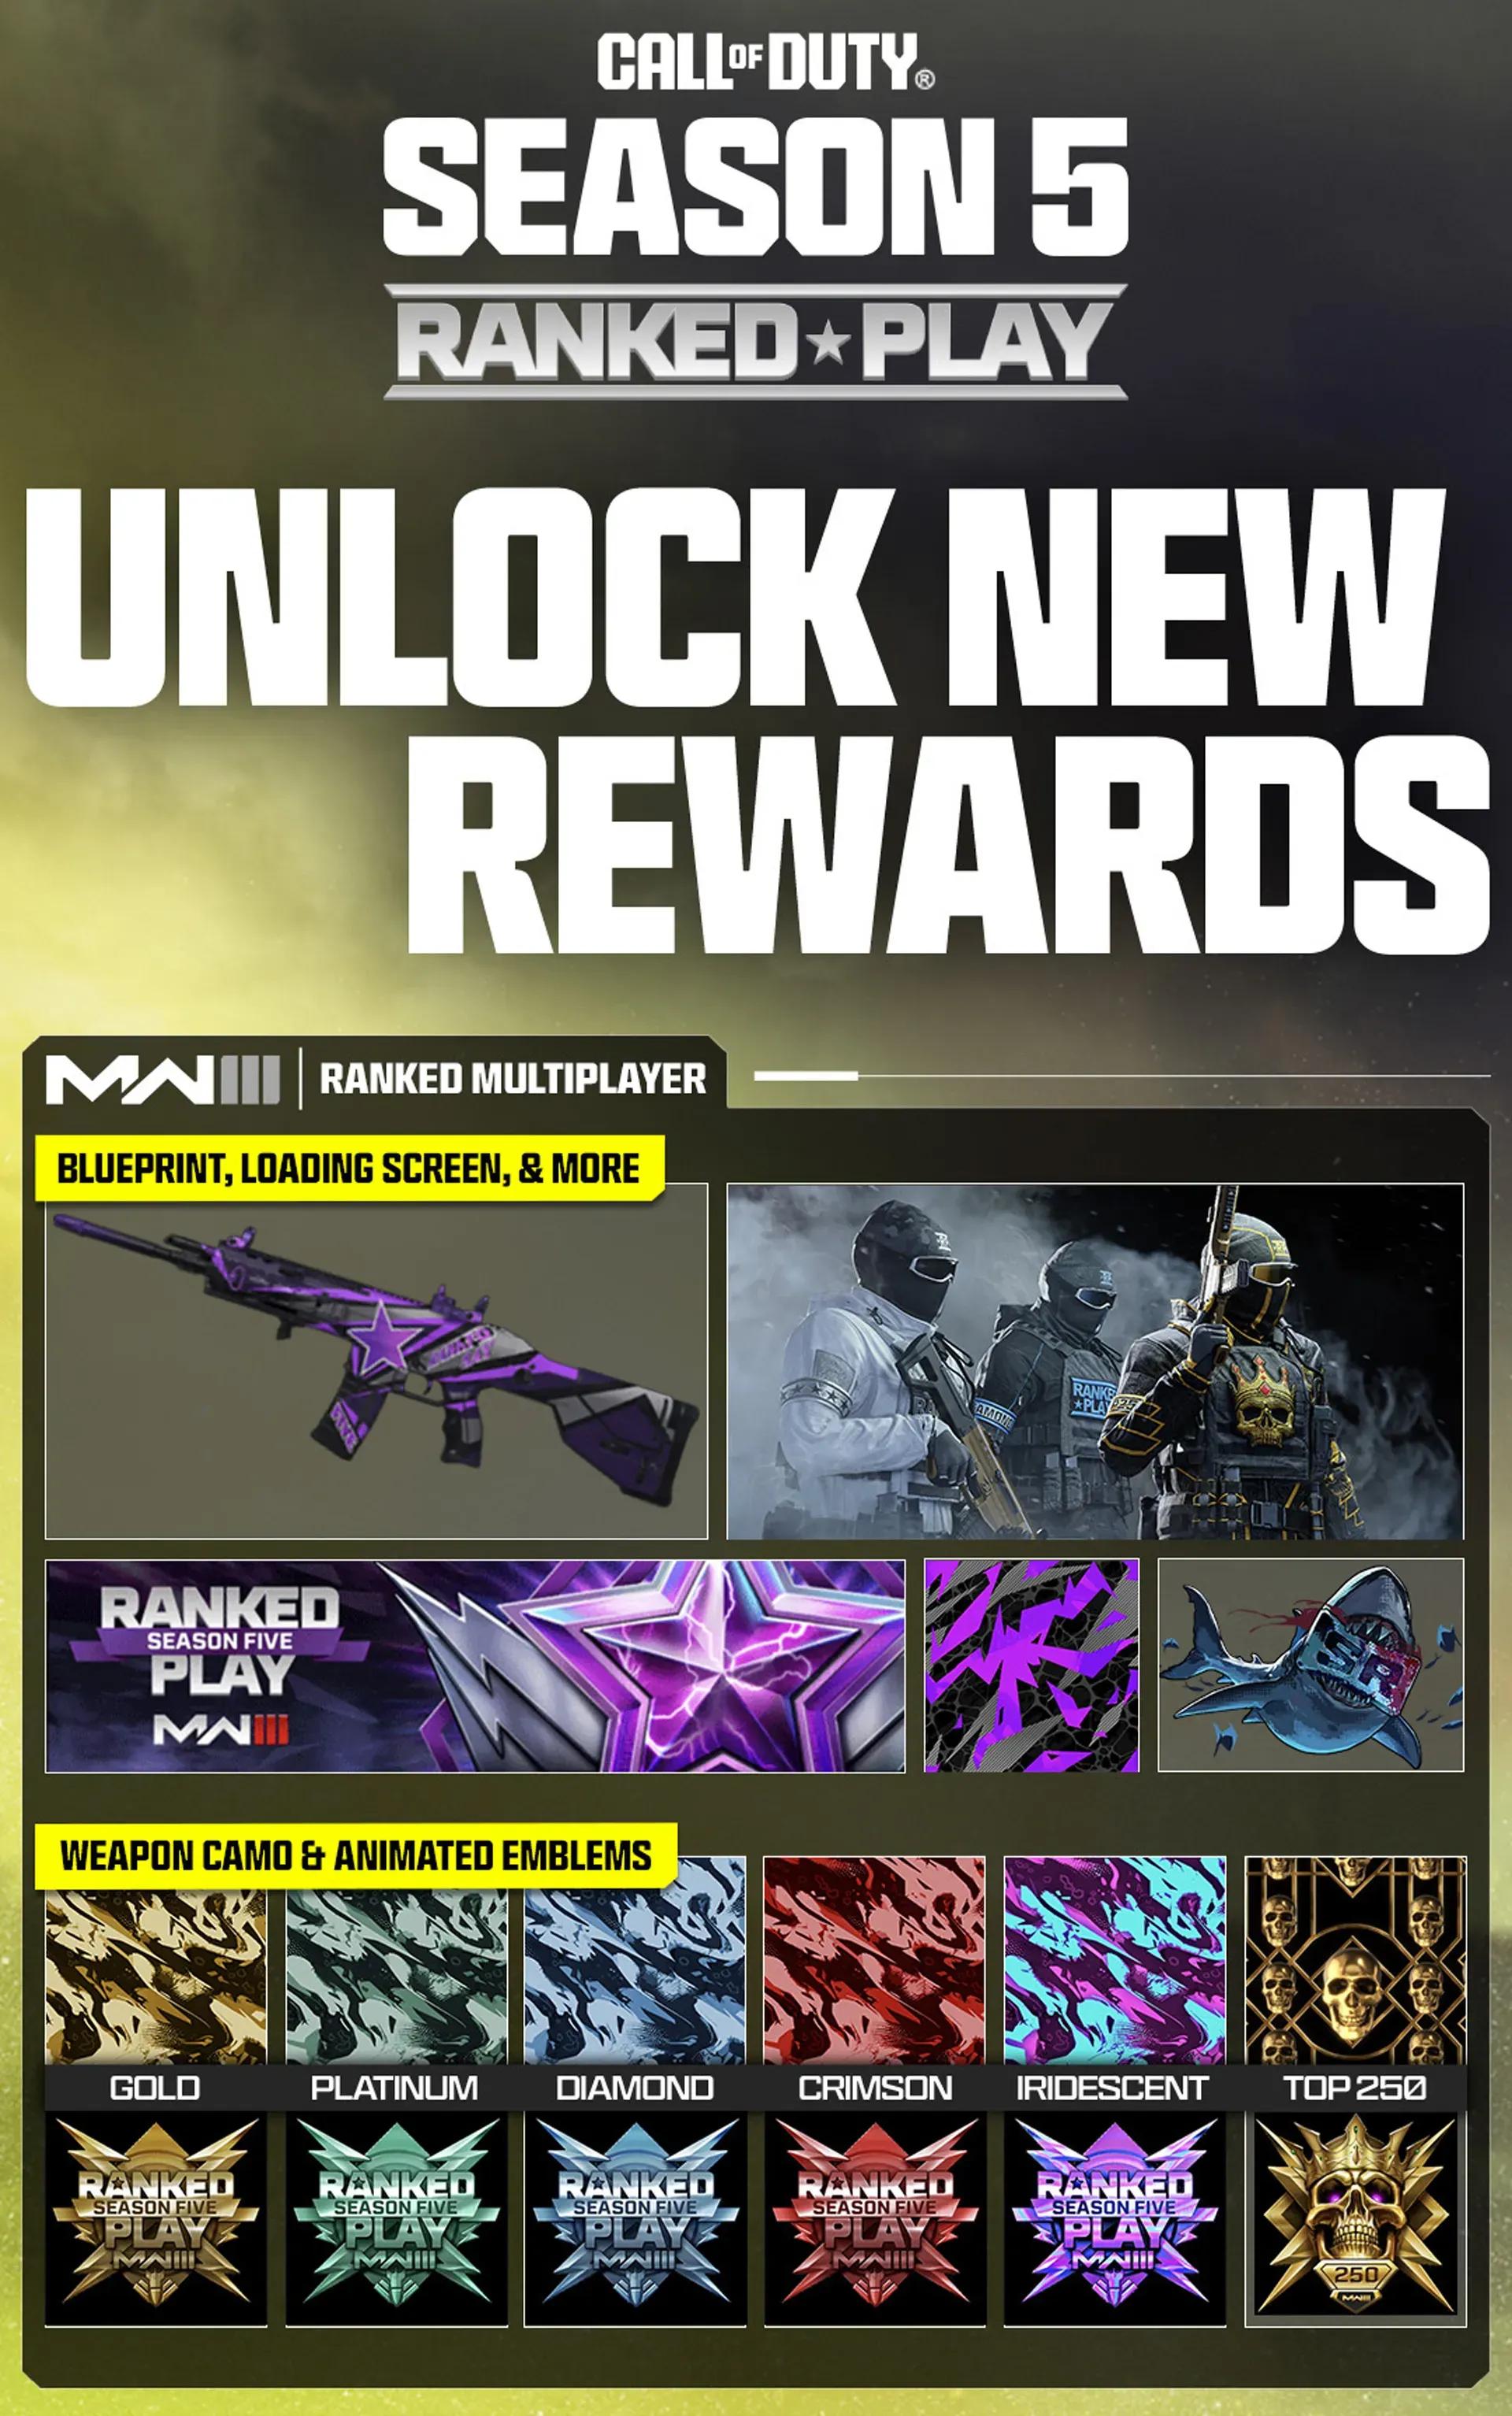 Ranked Play Resurgence players can earn rewards via Ranking